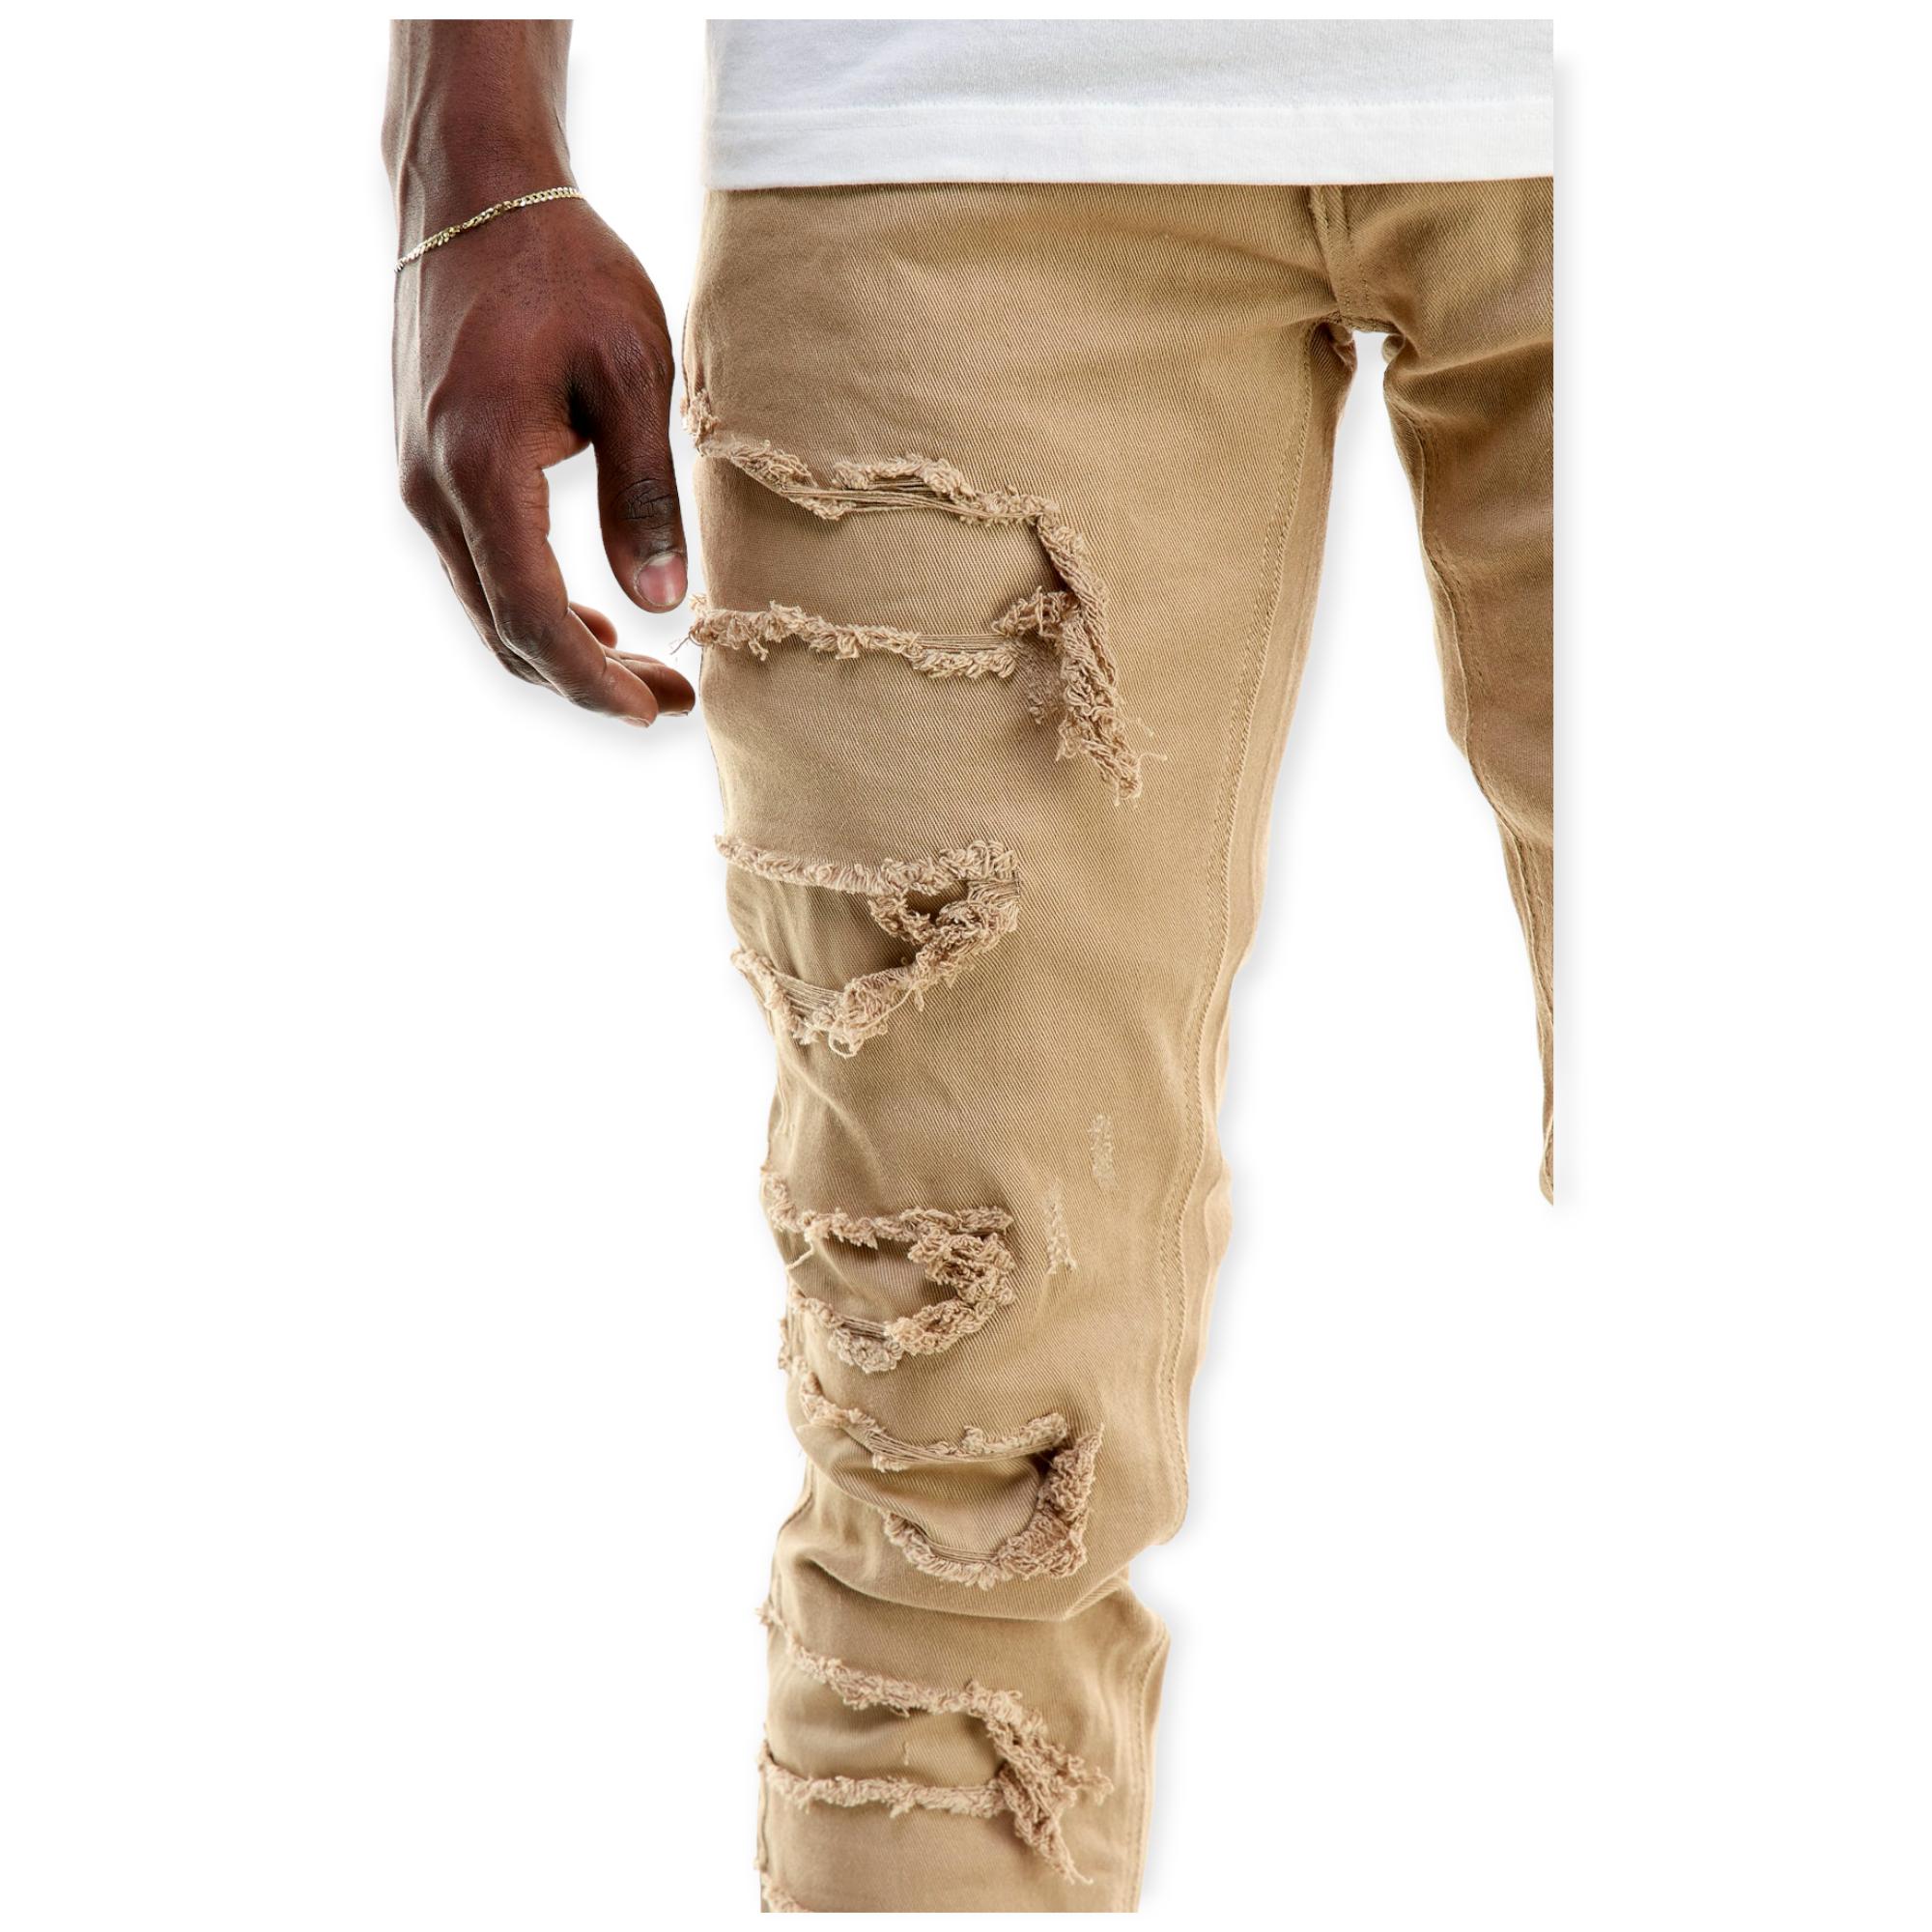 KDNK Pants Men Complex Jeans (Khaki)